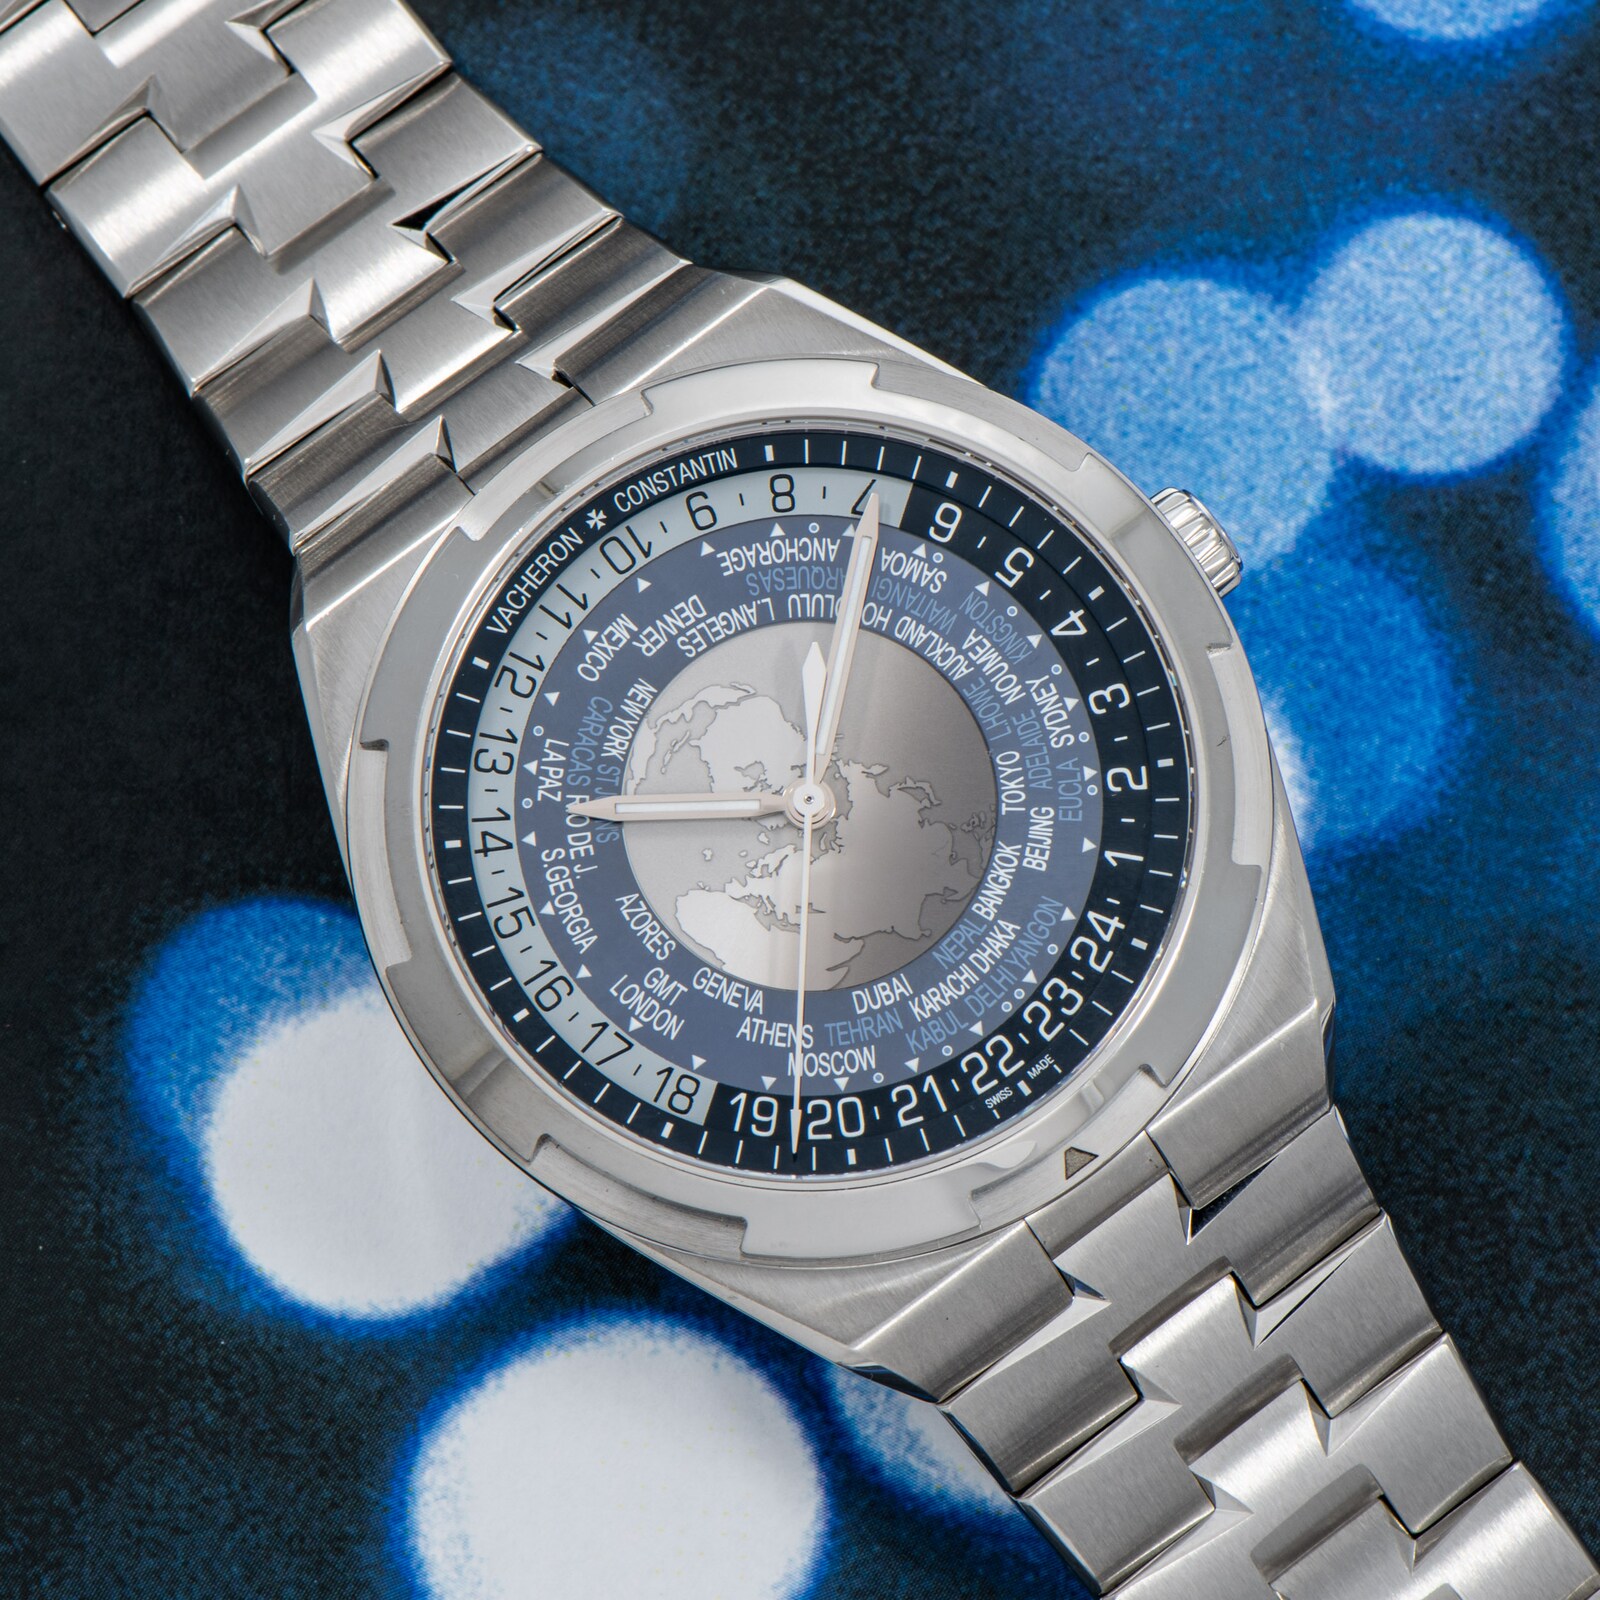 Overseas Certified Pre Owned Watch in Silver - Vacheron Constantin